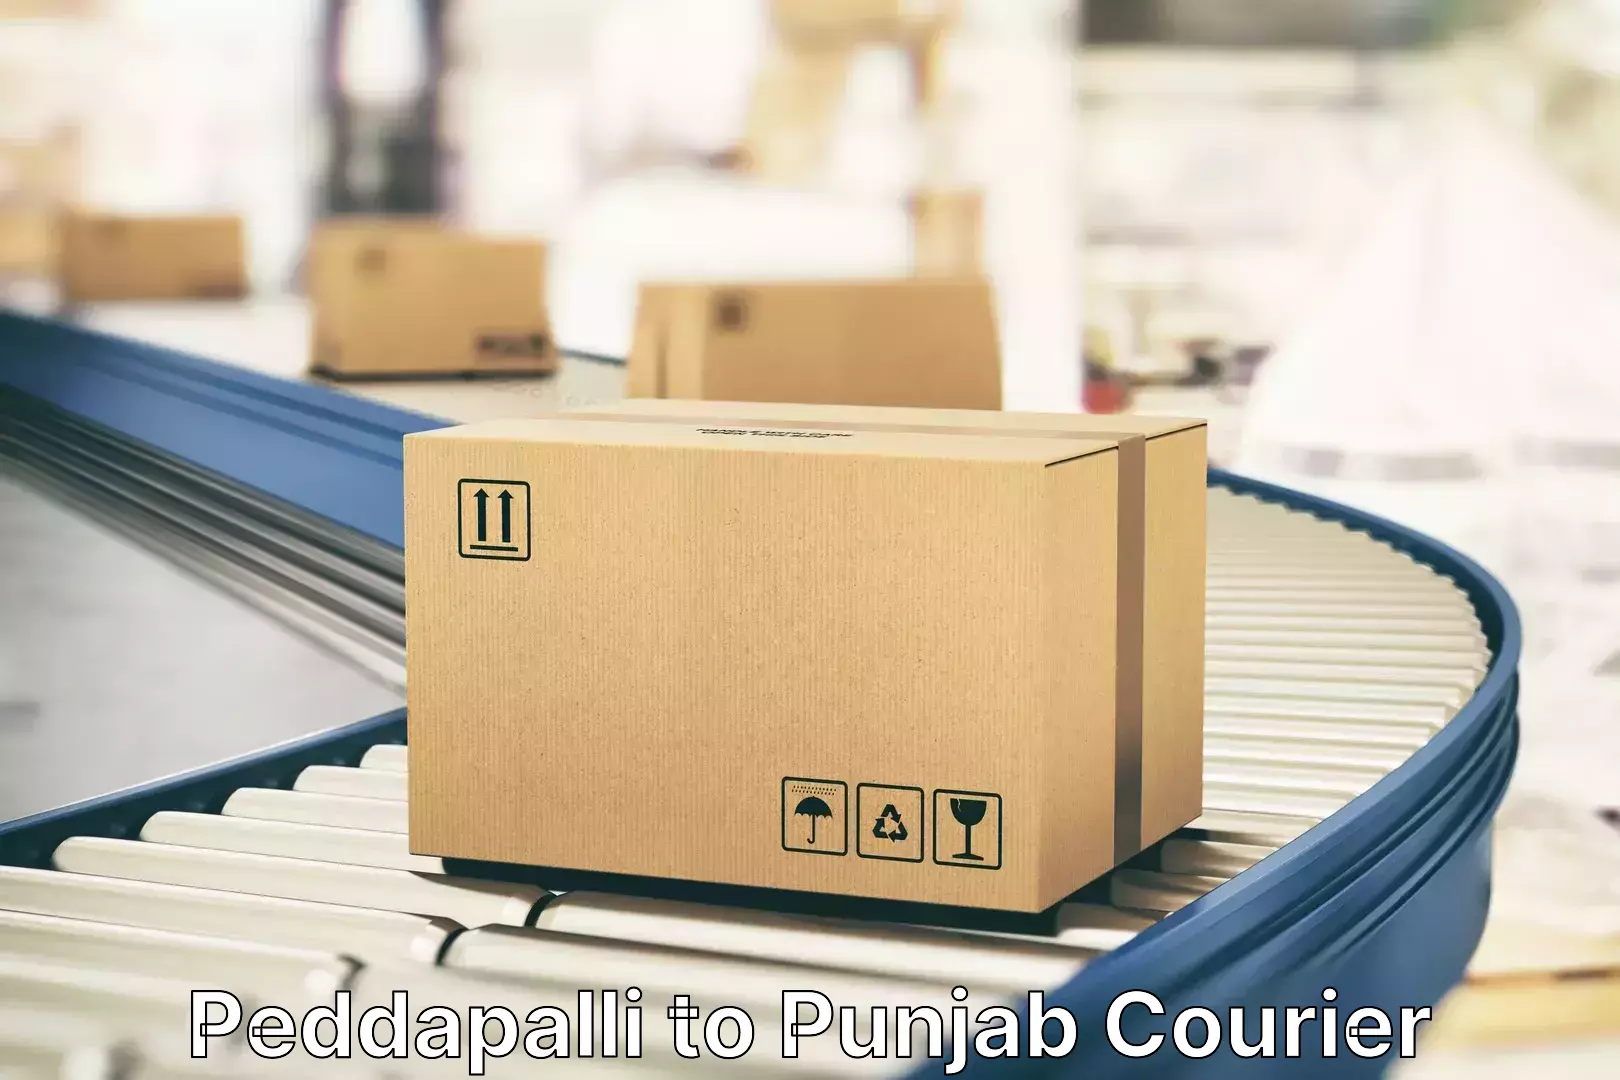 Luggage transport company Peddapalli to Punjab